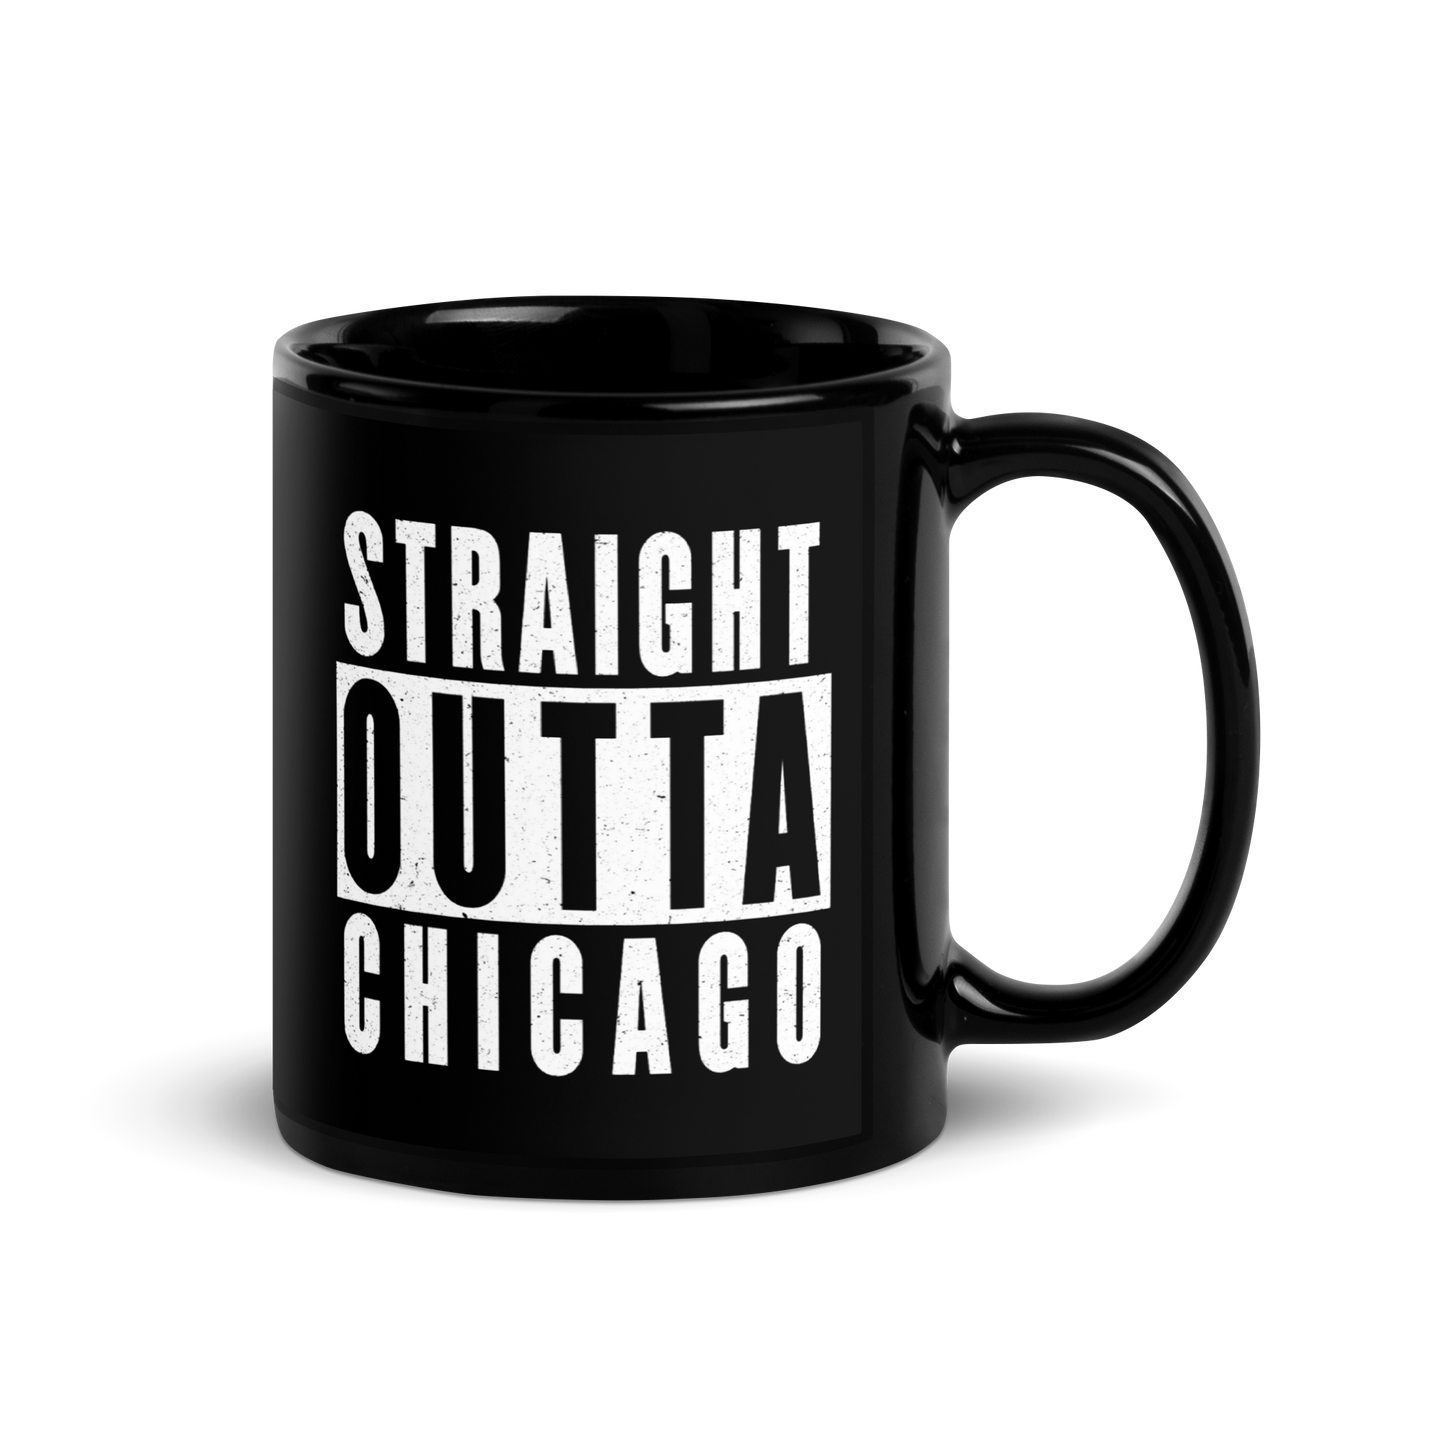 MUG Glossy Black - STRAIGHT OUTTA CHICAGO